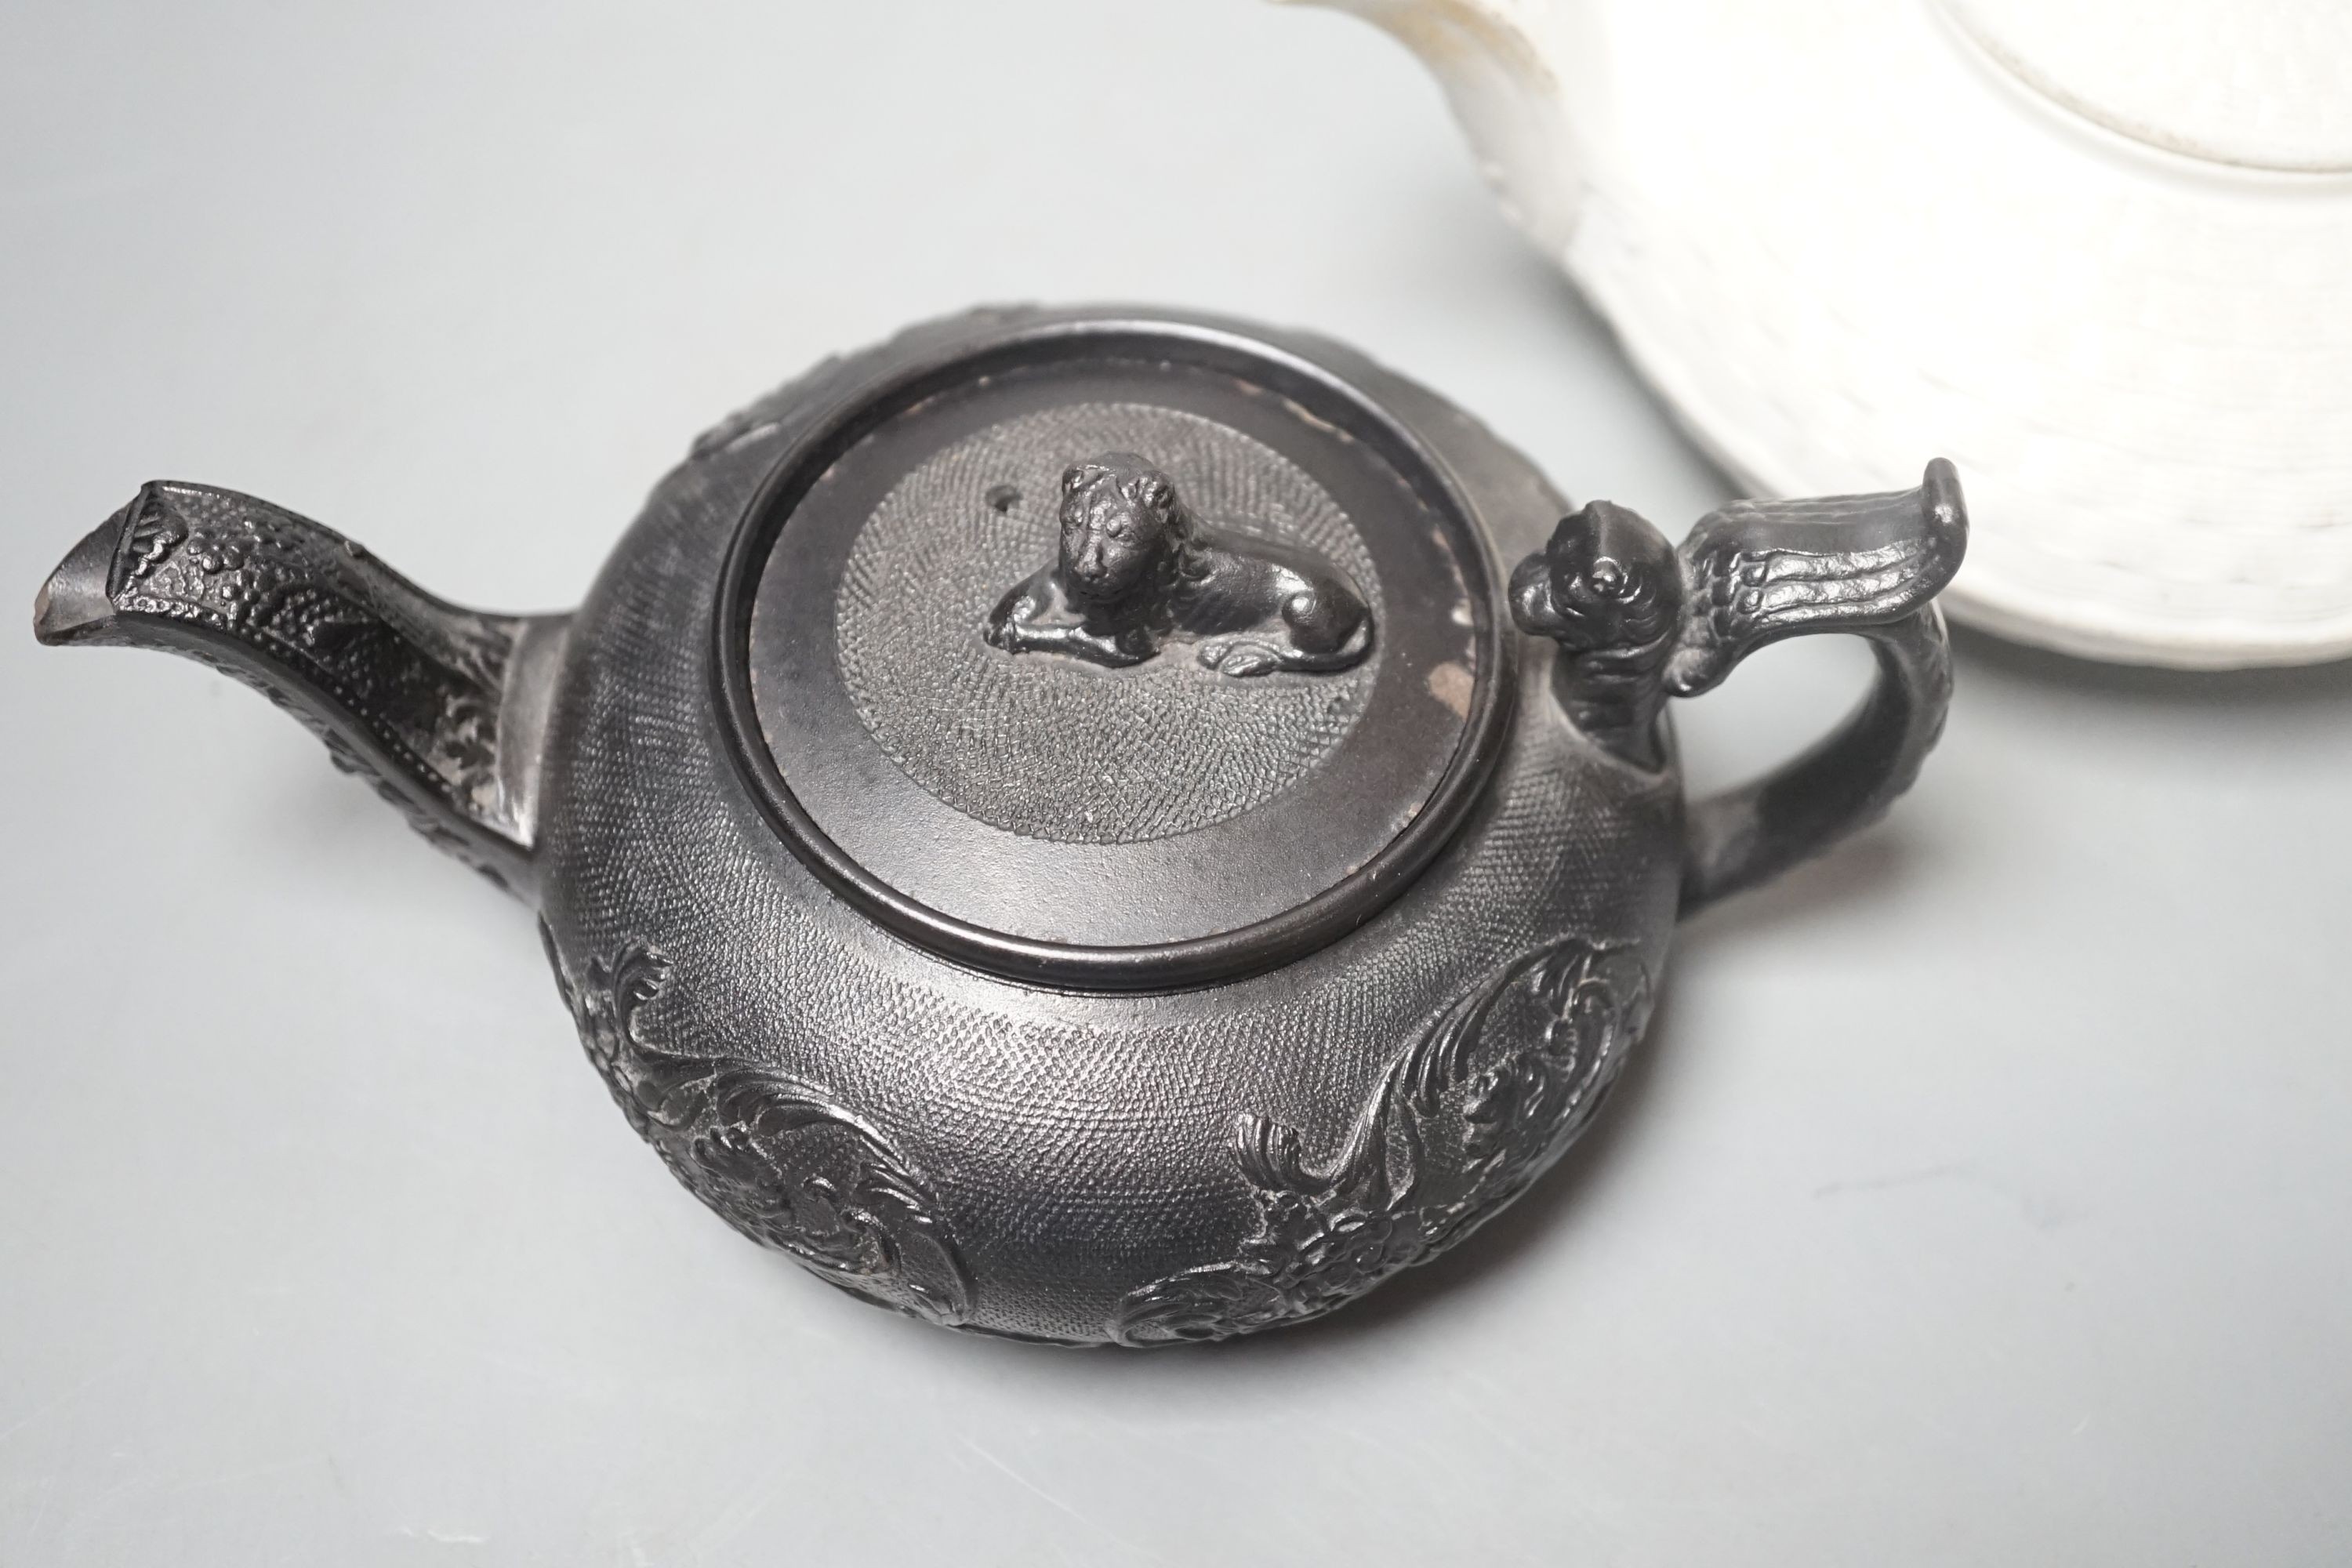 A Wedgwood caneware teapot c.1810 and an English black basalt teapot c.1810